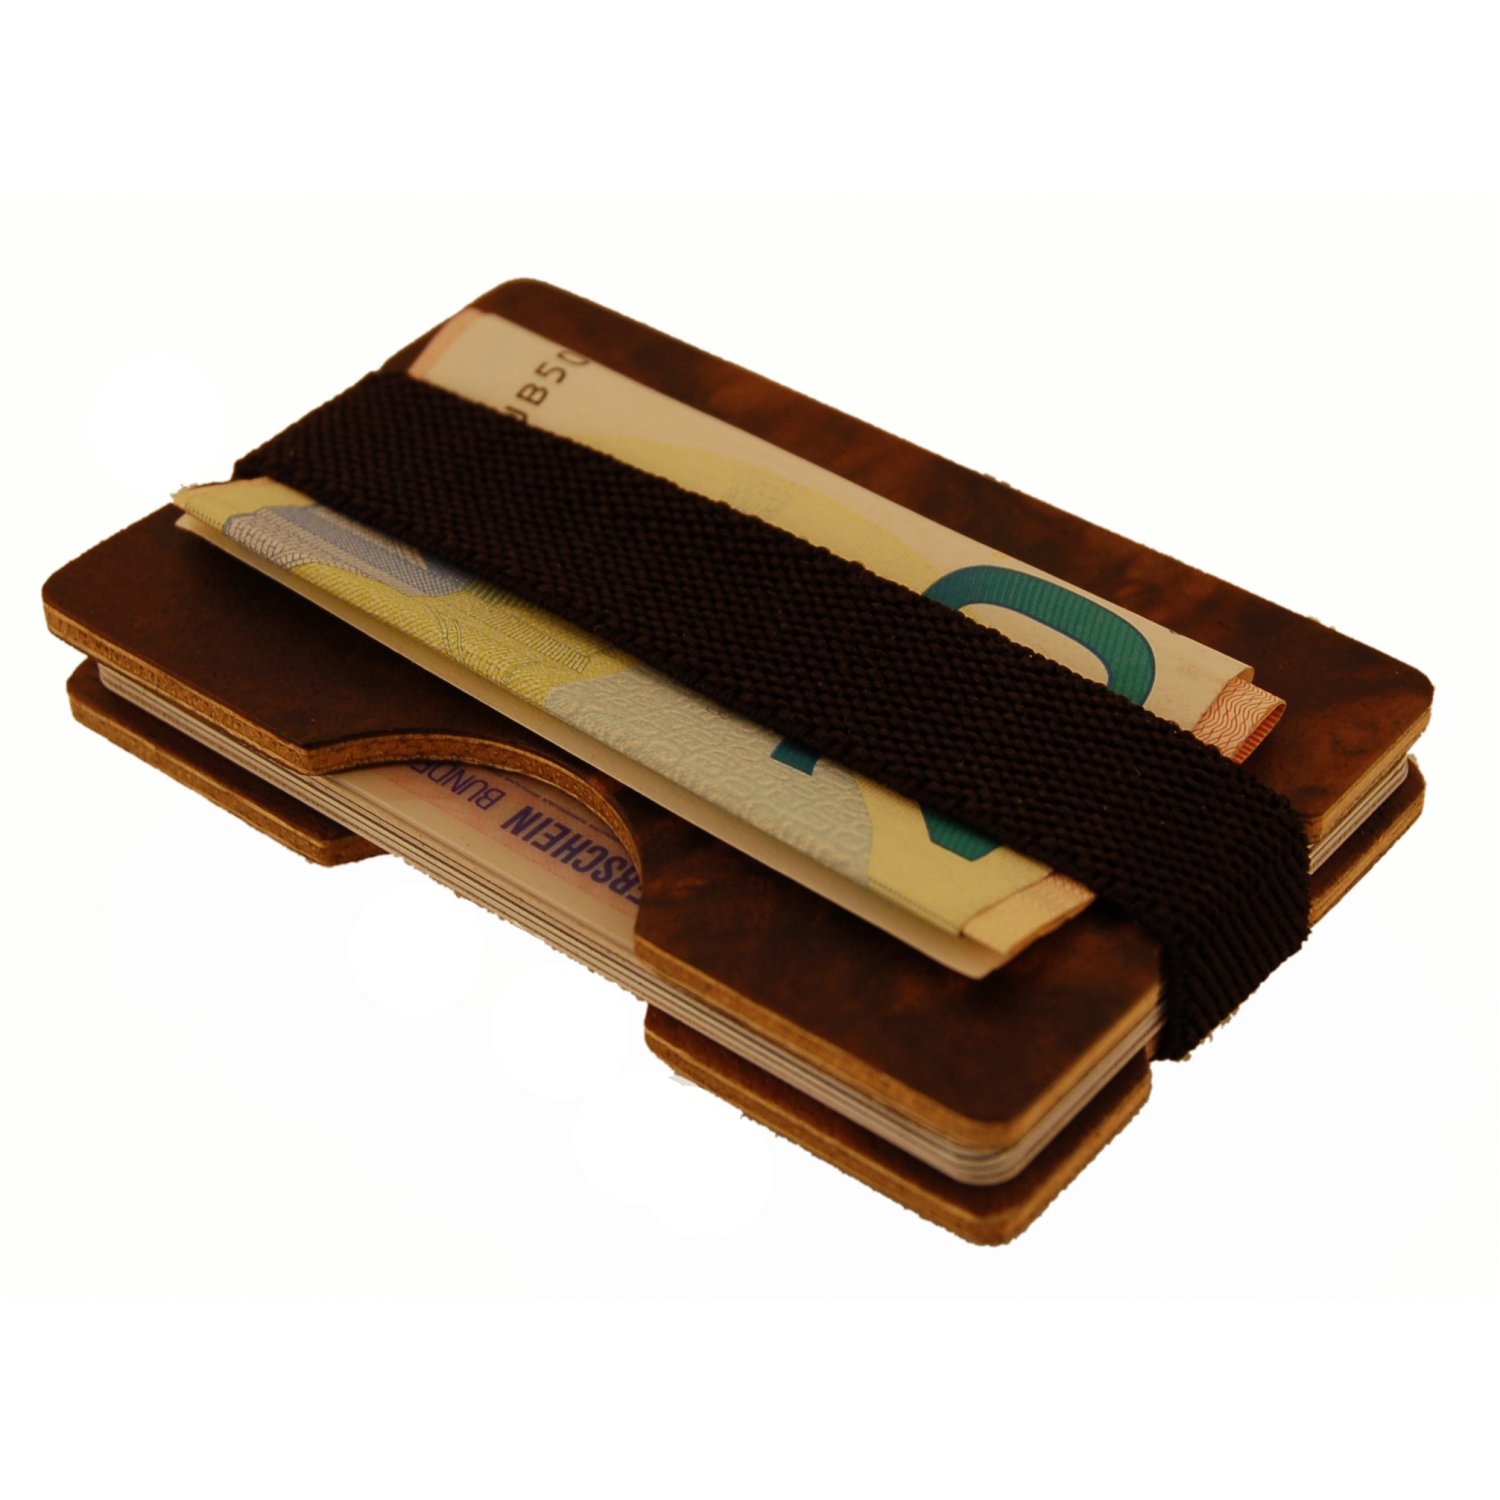 Mini-portefeuille in legno di noce